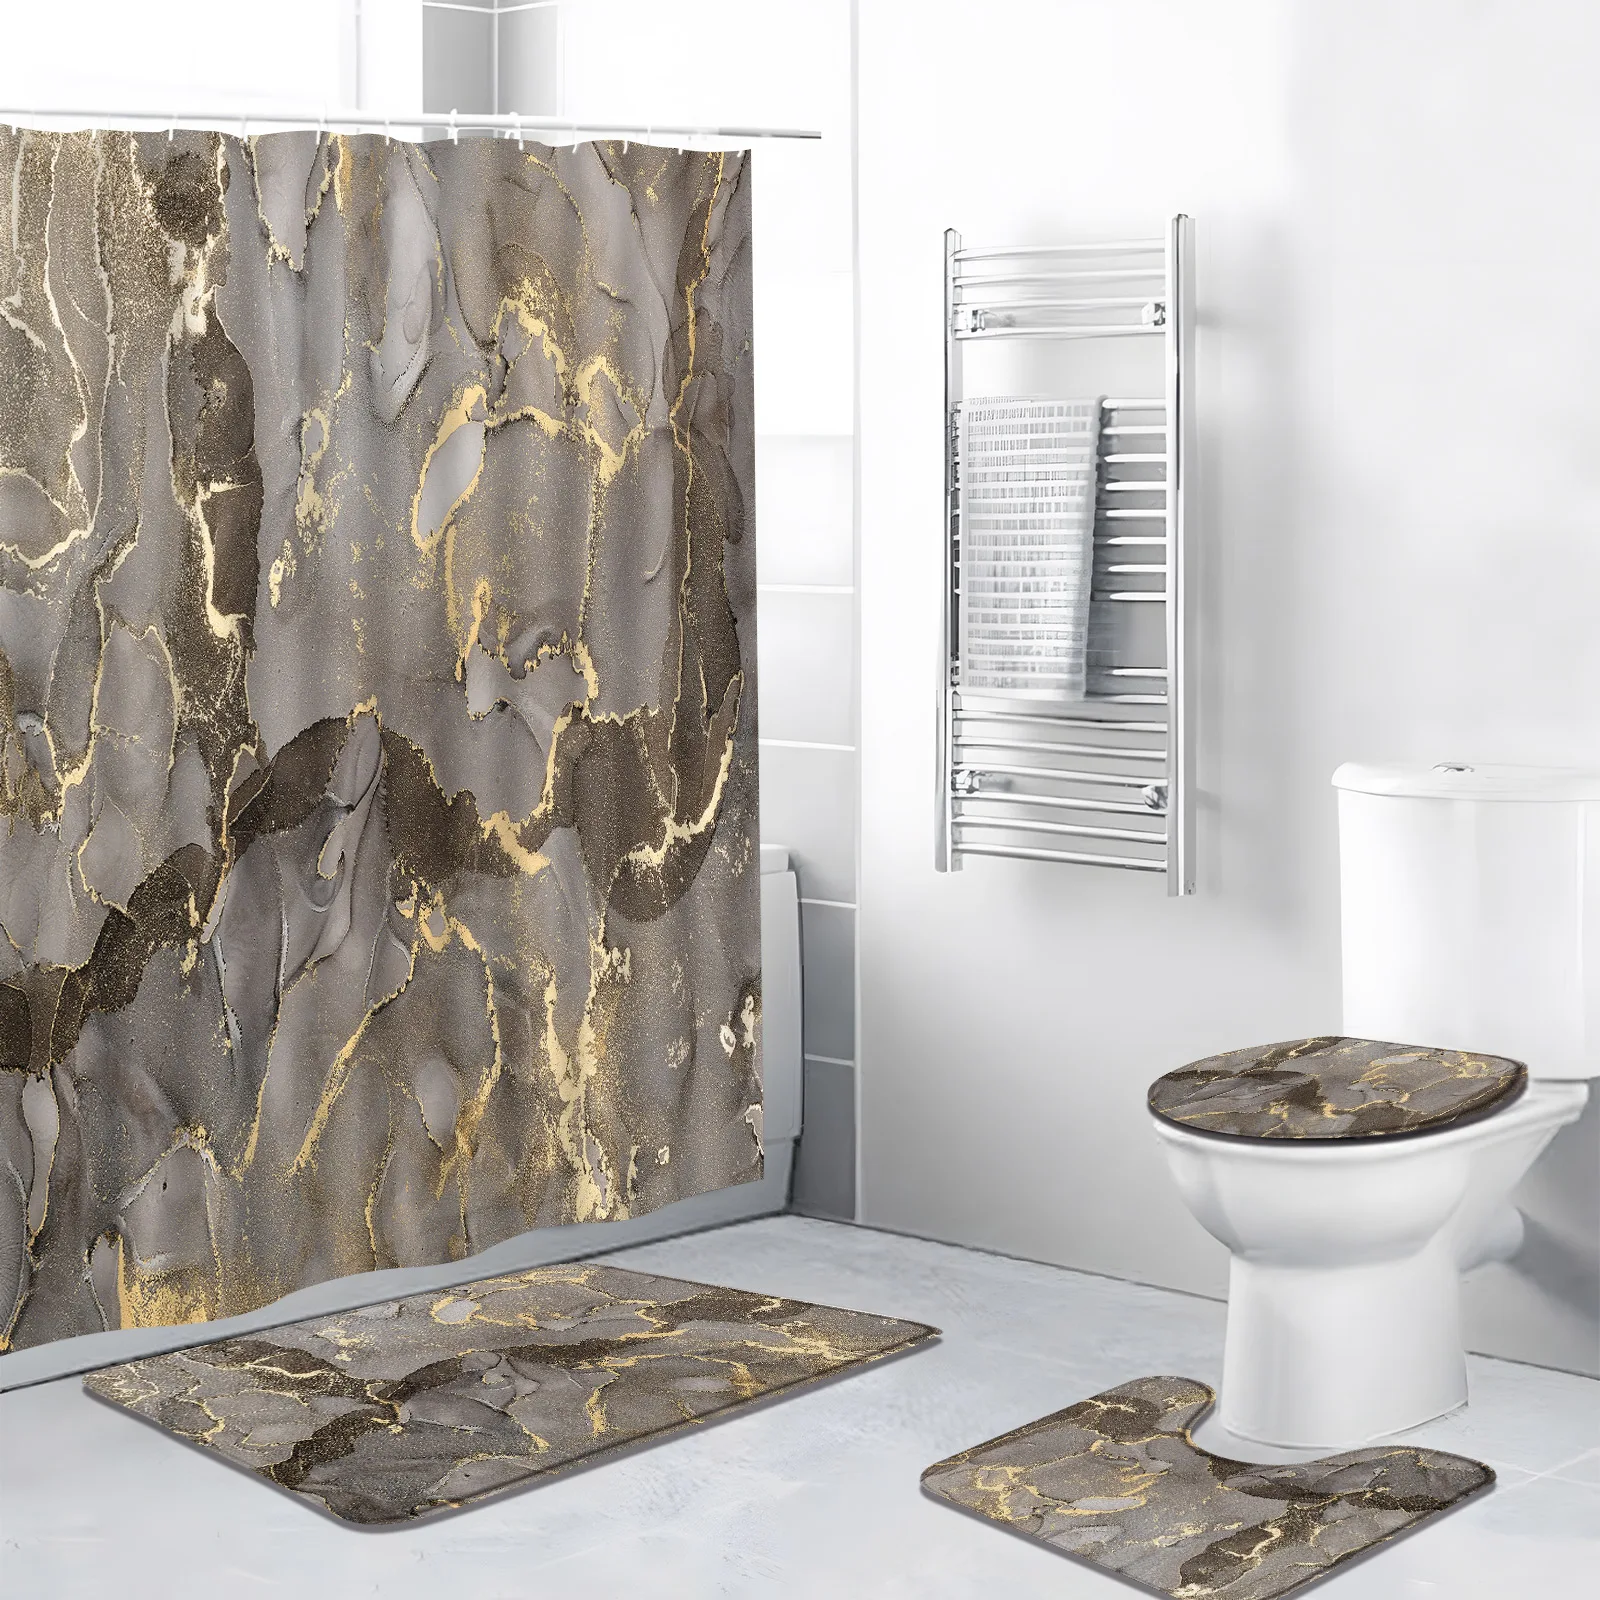 

4pcs/Set Marble Shower Curtain Abstract Crack Ink Gold Texture Luxury Stone Print Grain Bathroom Decor Bath Mat Rug Toilet Cover